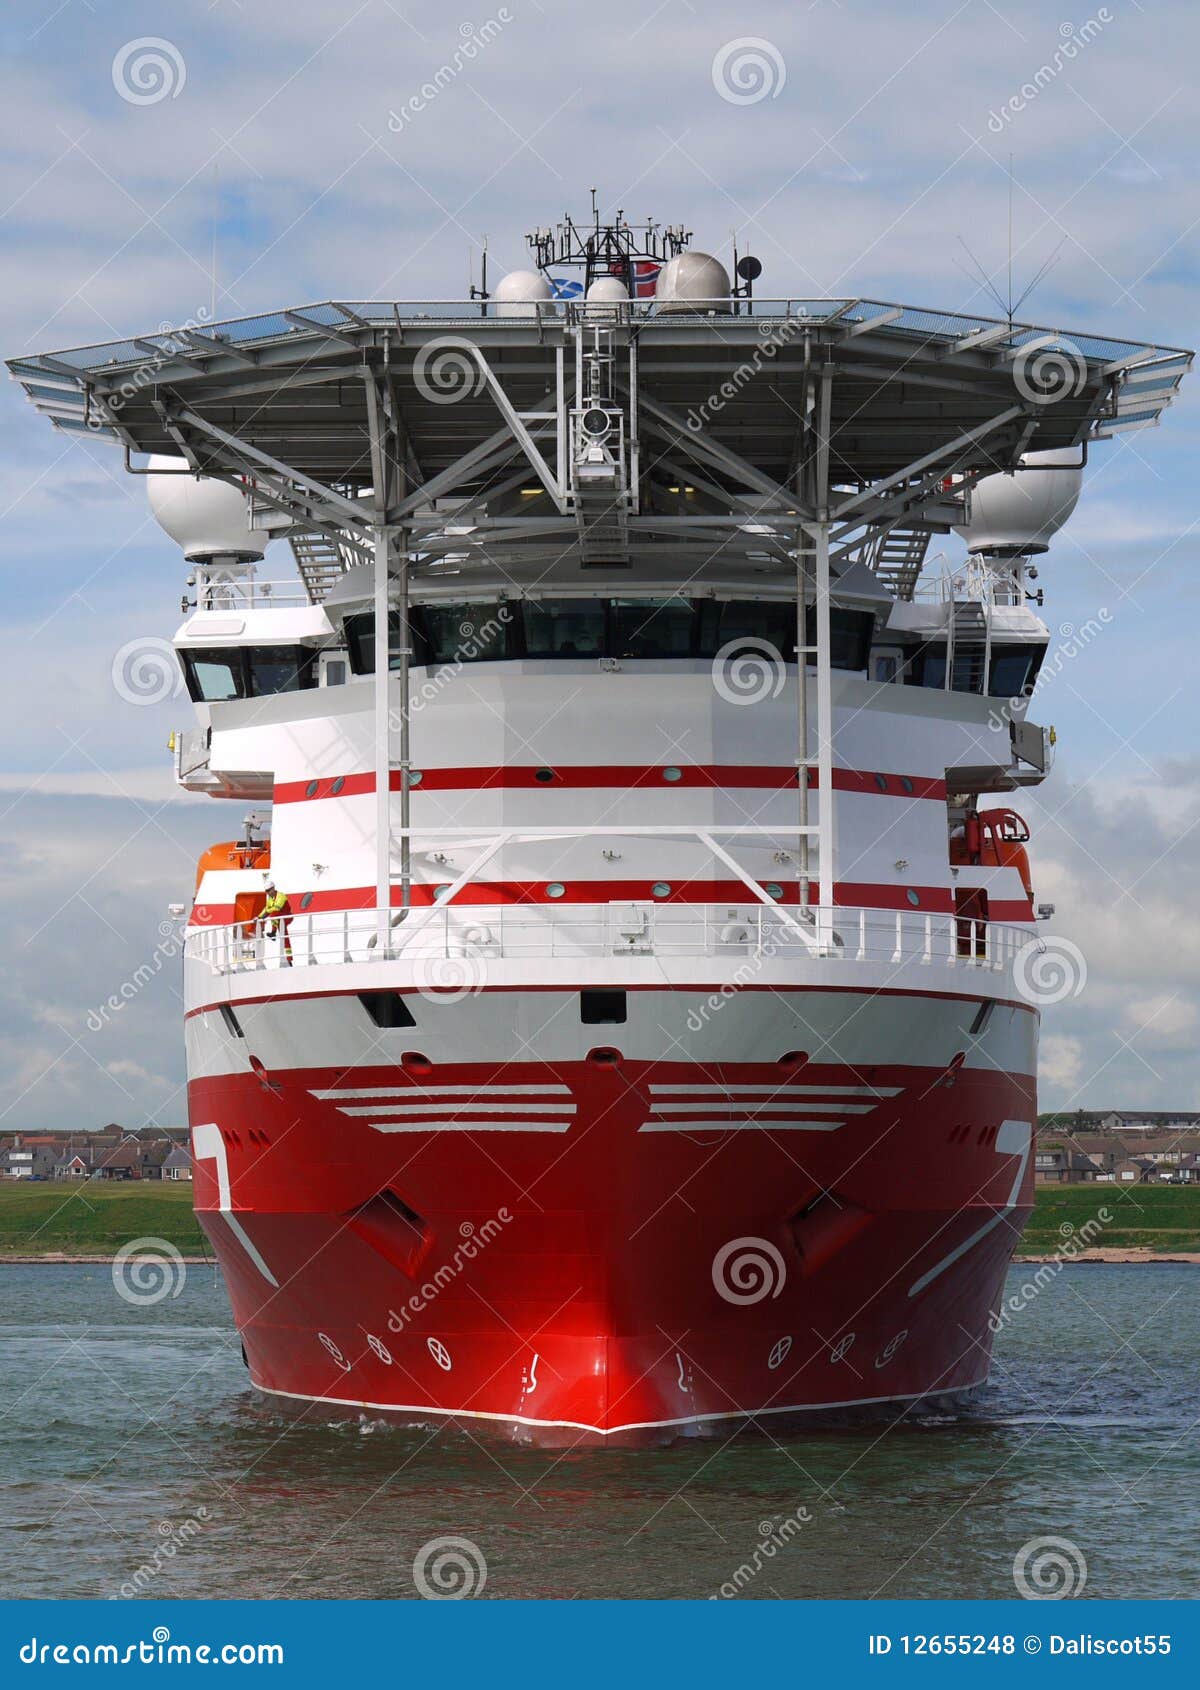 offshore vessel clipart - photo #28